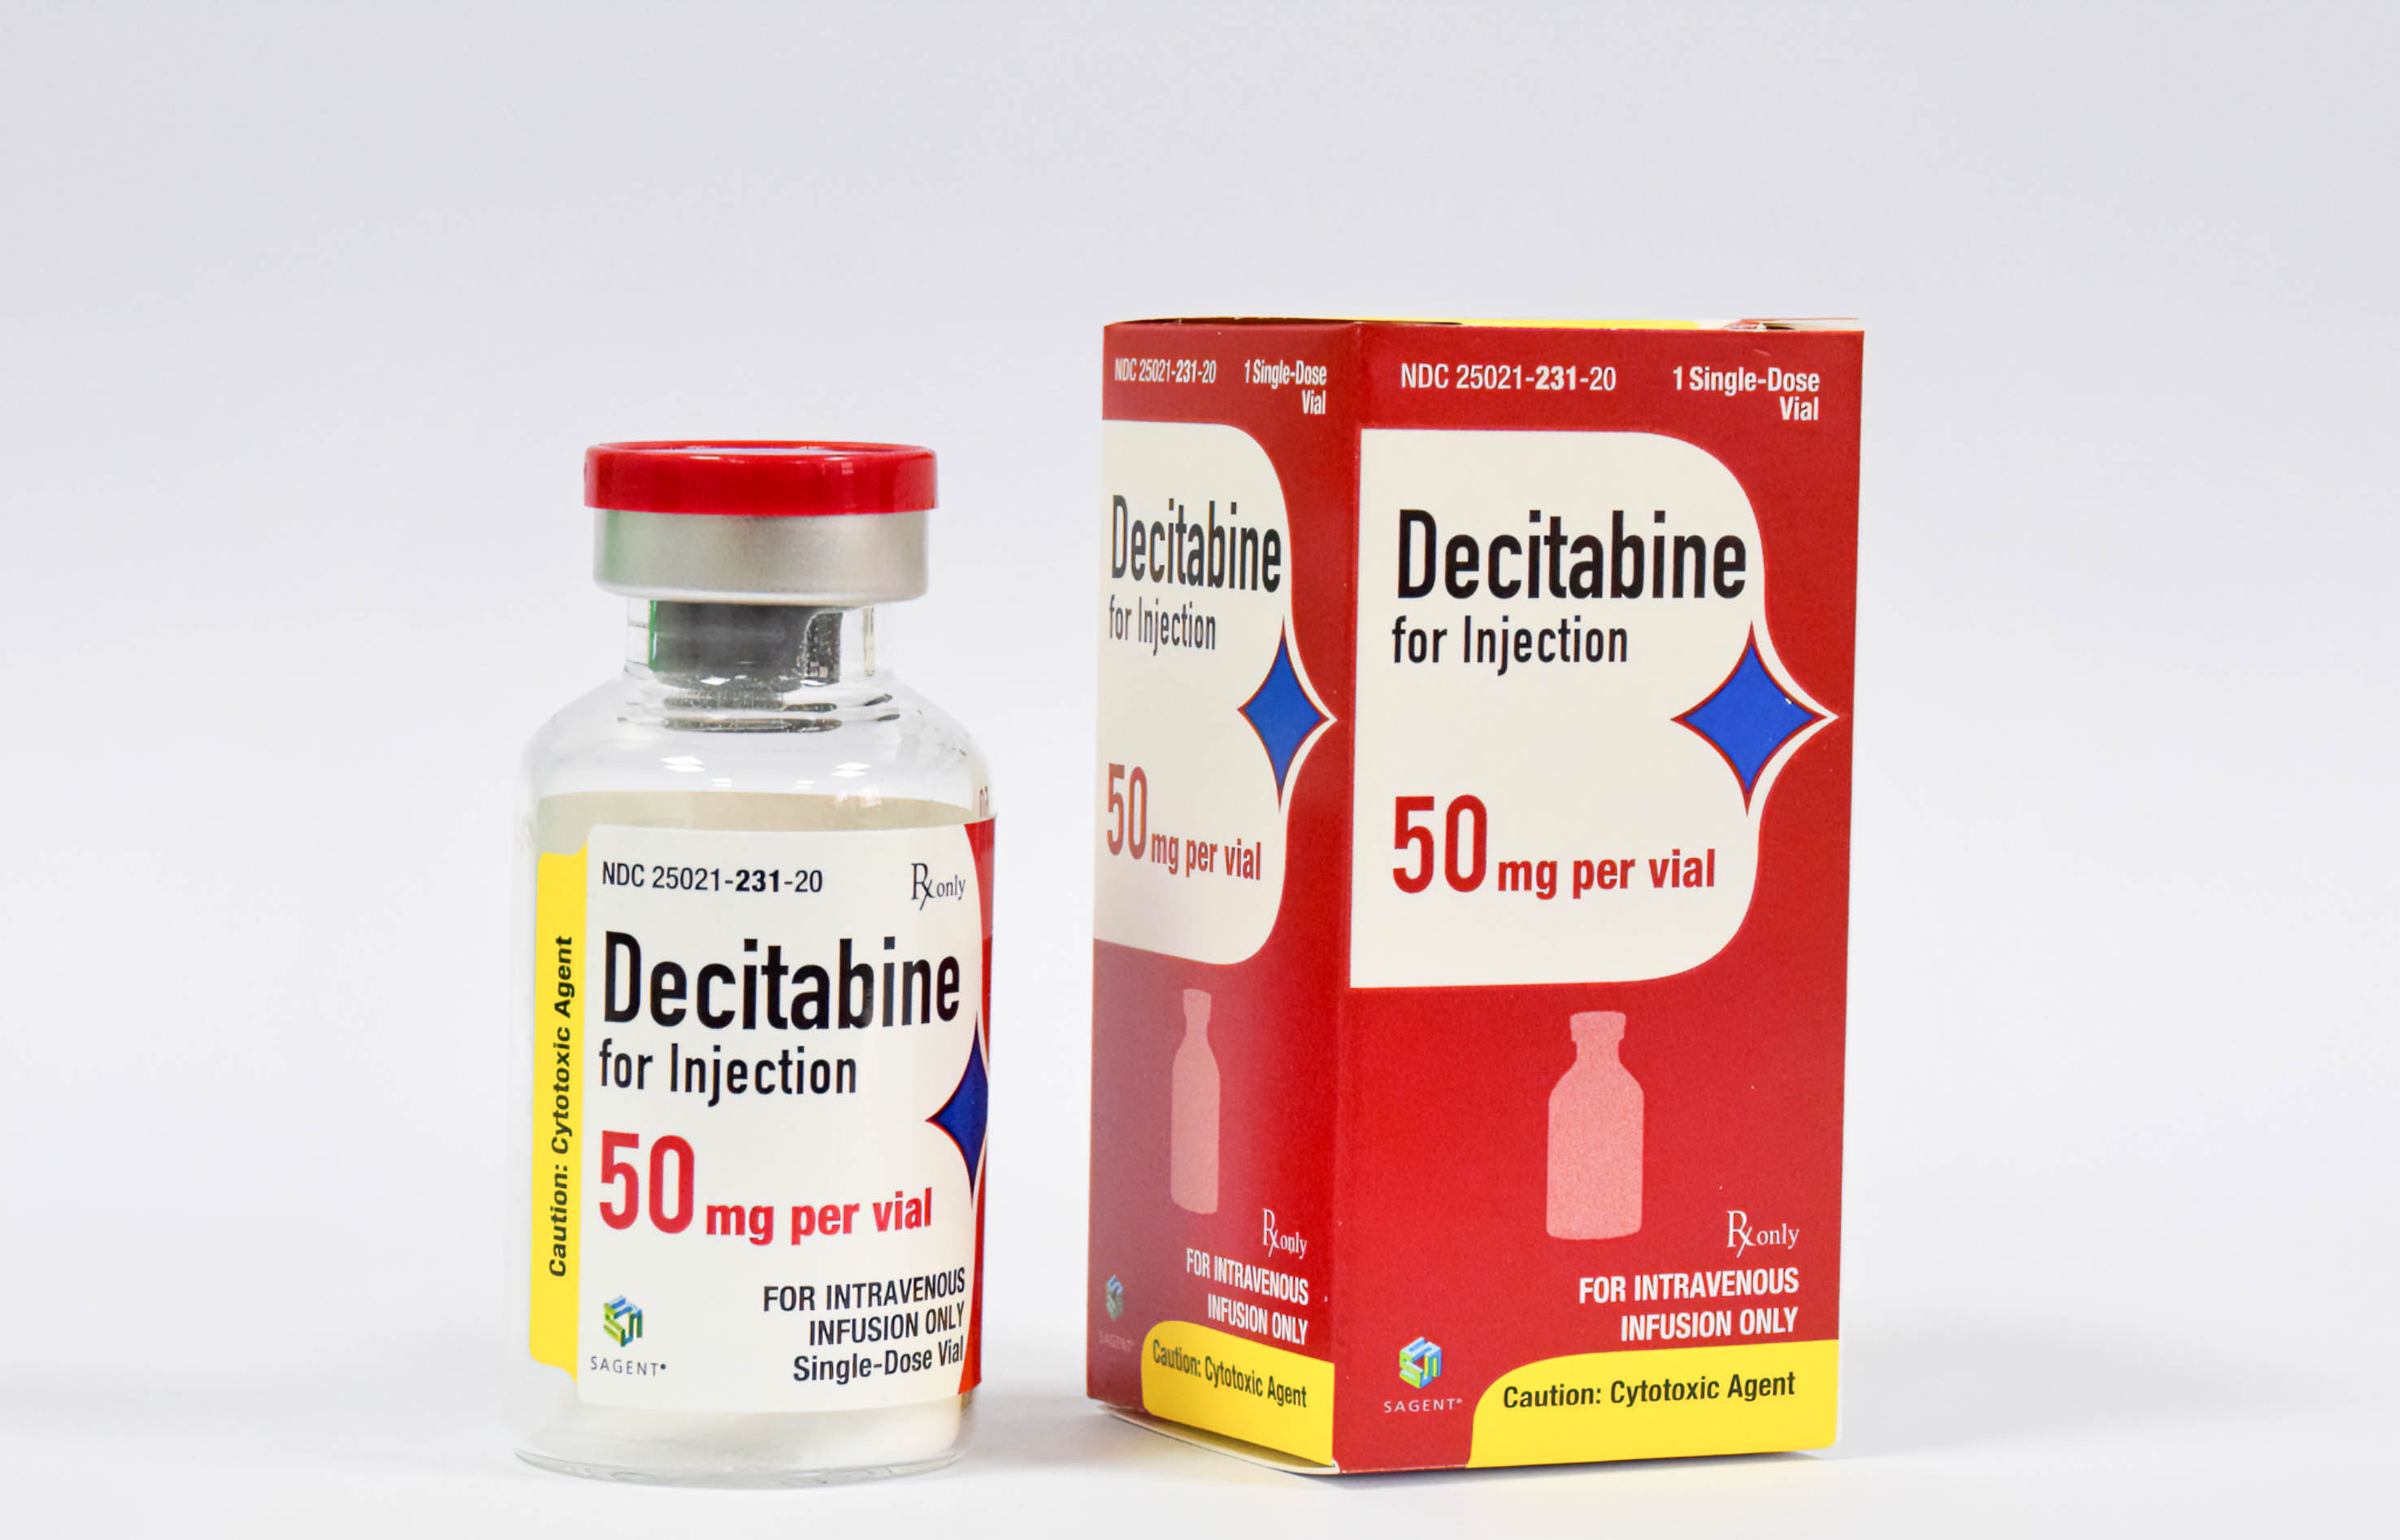 Decitabine for Injection